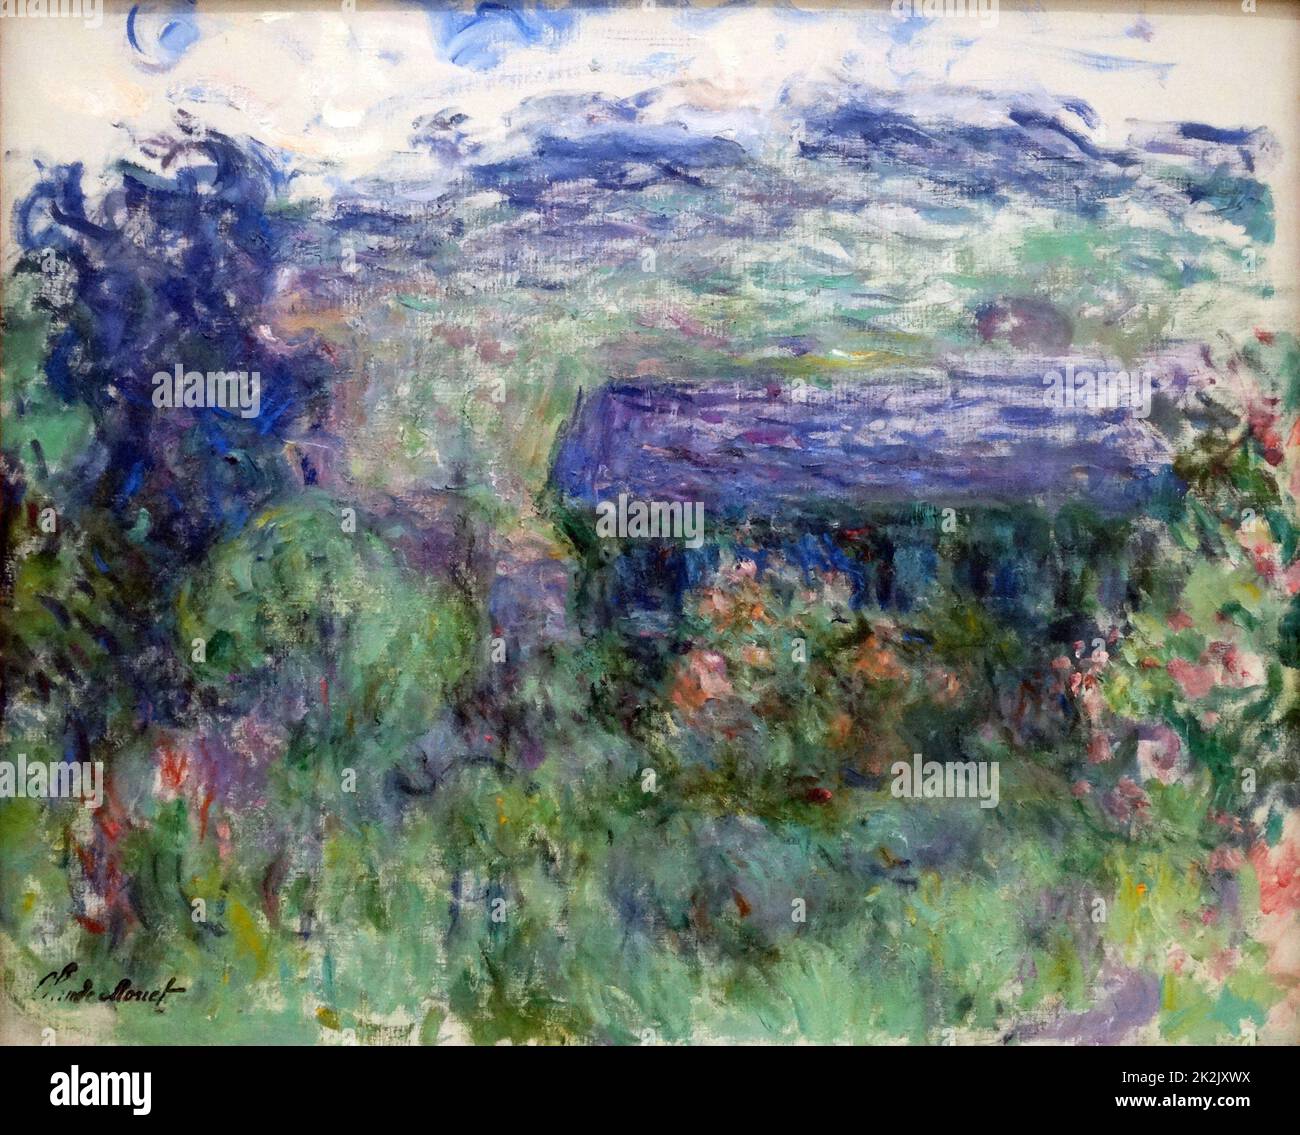 La Maison à Travers les Roses. 'The House Sveded Through the Roses' (olio su tela) di Claude Monet. 1925-1926 Museo Stedelijk di Arte moderna, Amsterdam Foto Stock